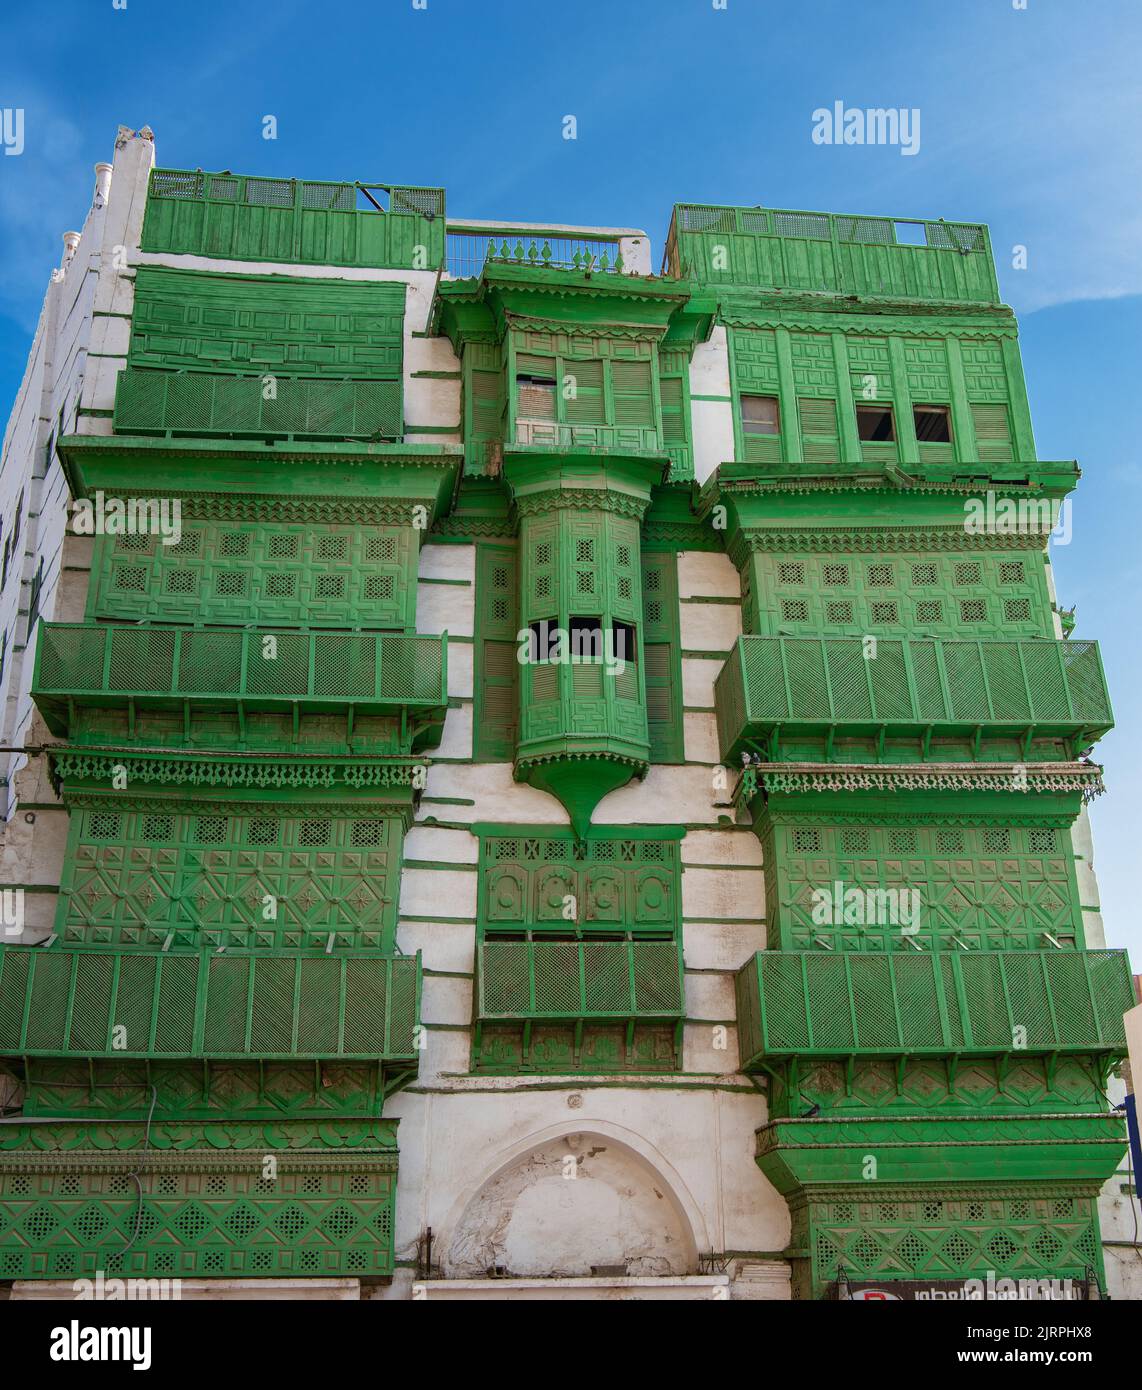 Landmark historic bulding Al Balad Jeddah Saudi Arabia Stock Photo